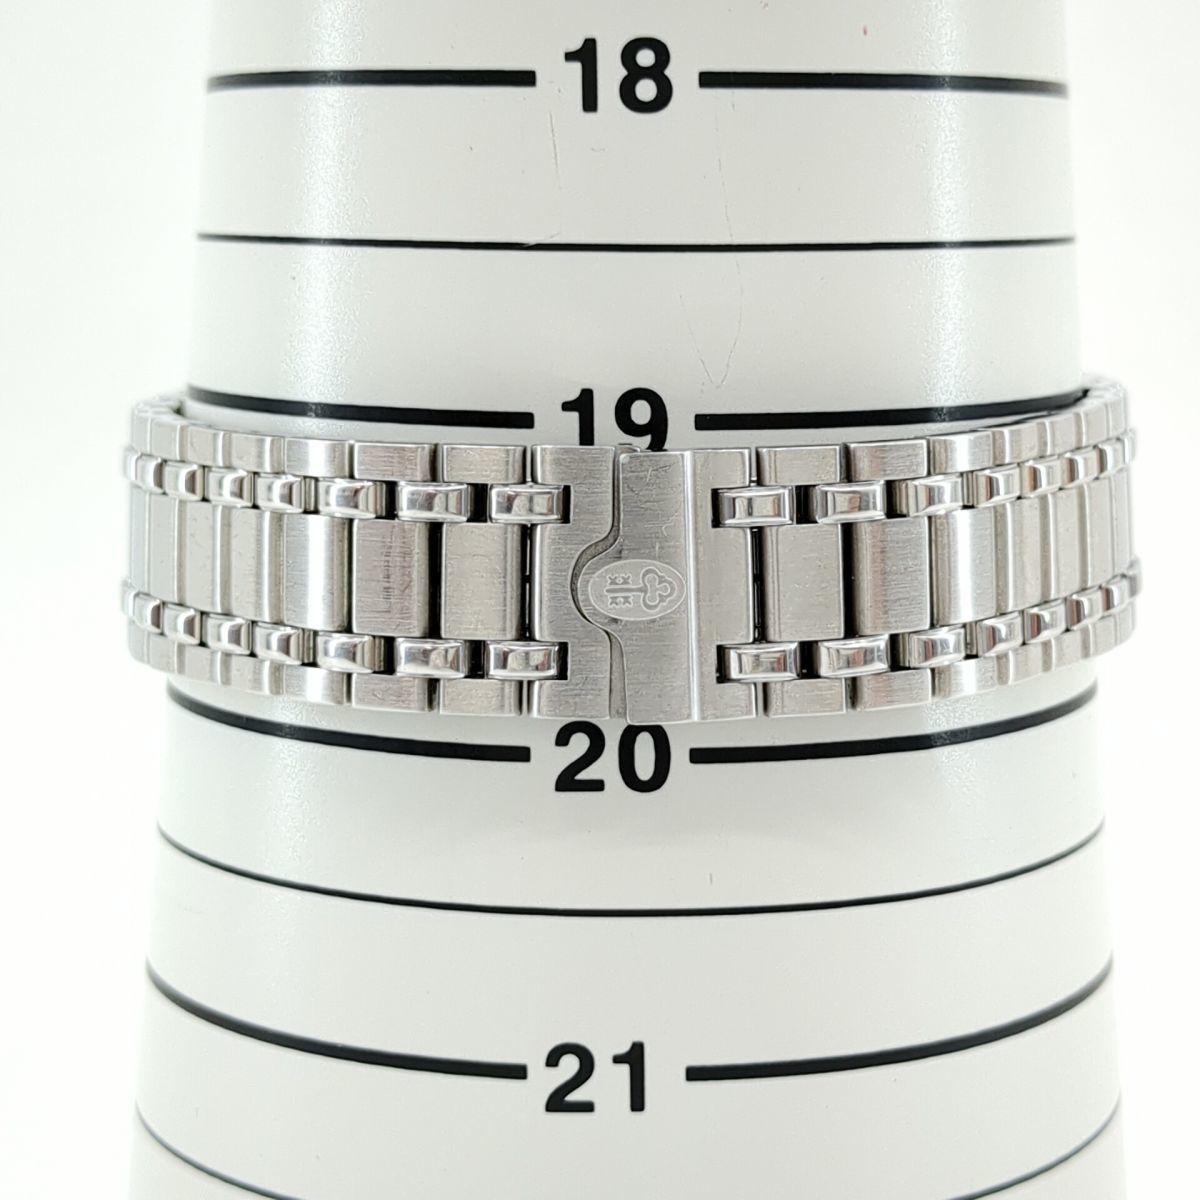  Corum Admiral z cup 99.430 quartz SS beige men's wristwatch CORUM used *3111/ Fujieda Inter shop 